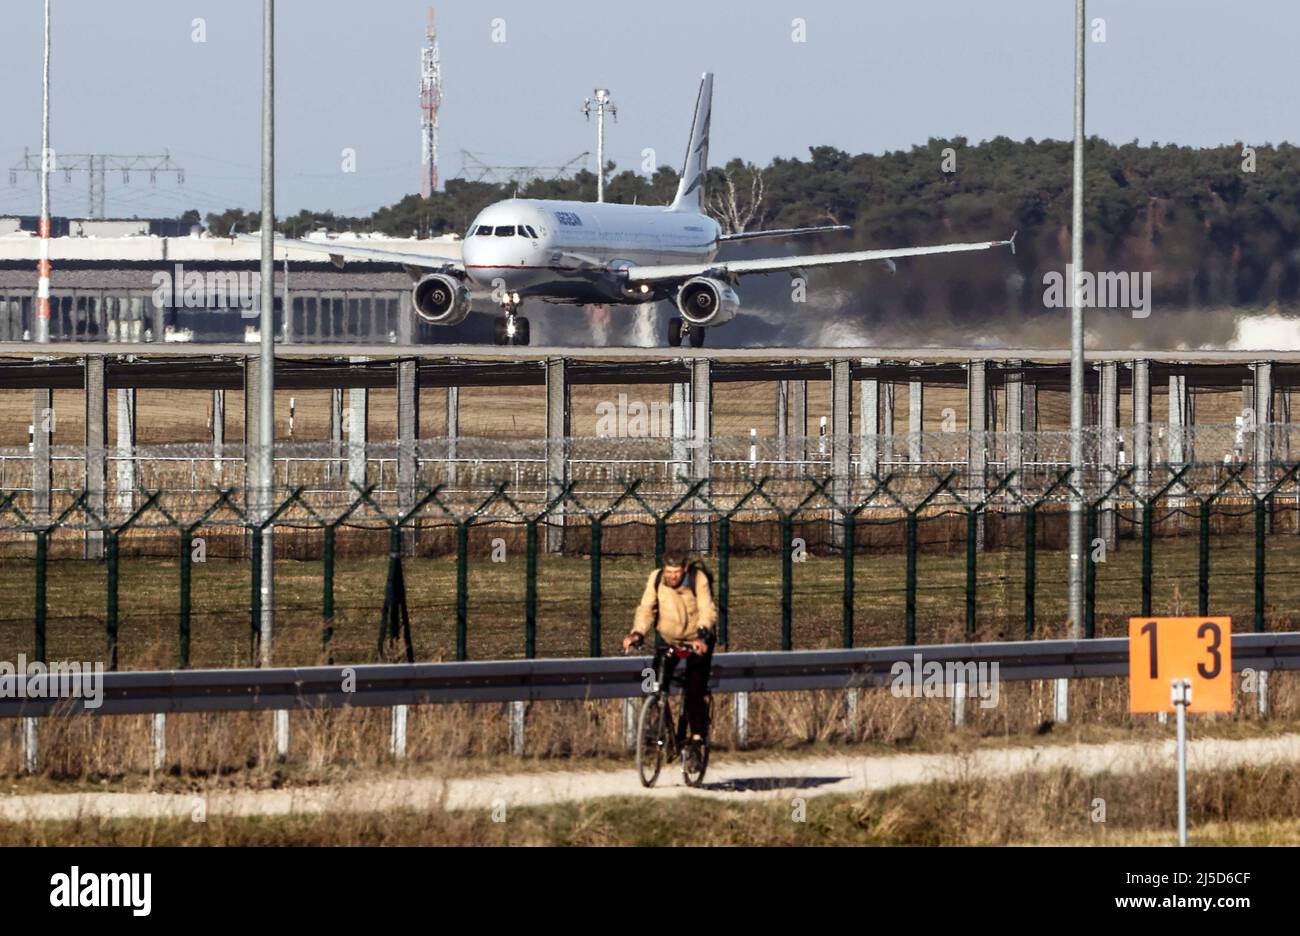 Un Airbus de la compagnie grecque Aegan prend son envol à l'aéroport BER, Berlin Brandenburg. [traduction automatique] Banque D'Images